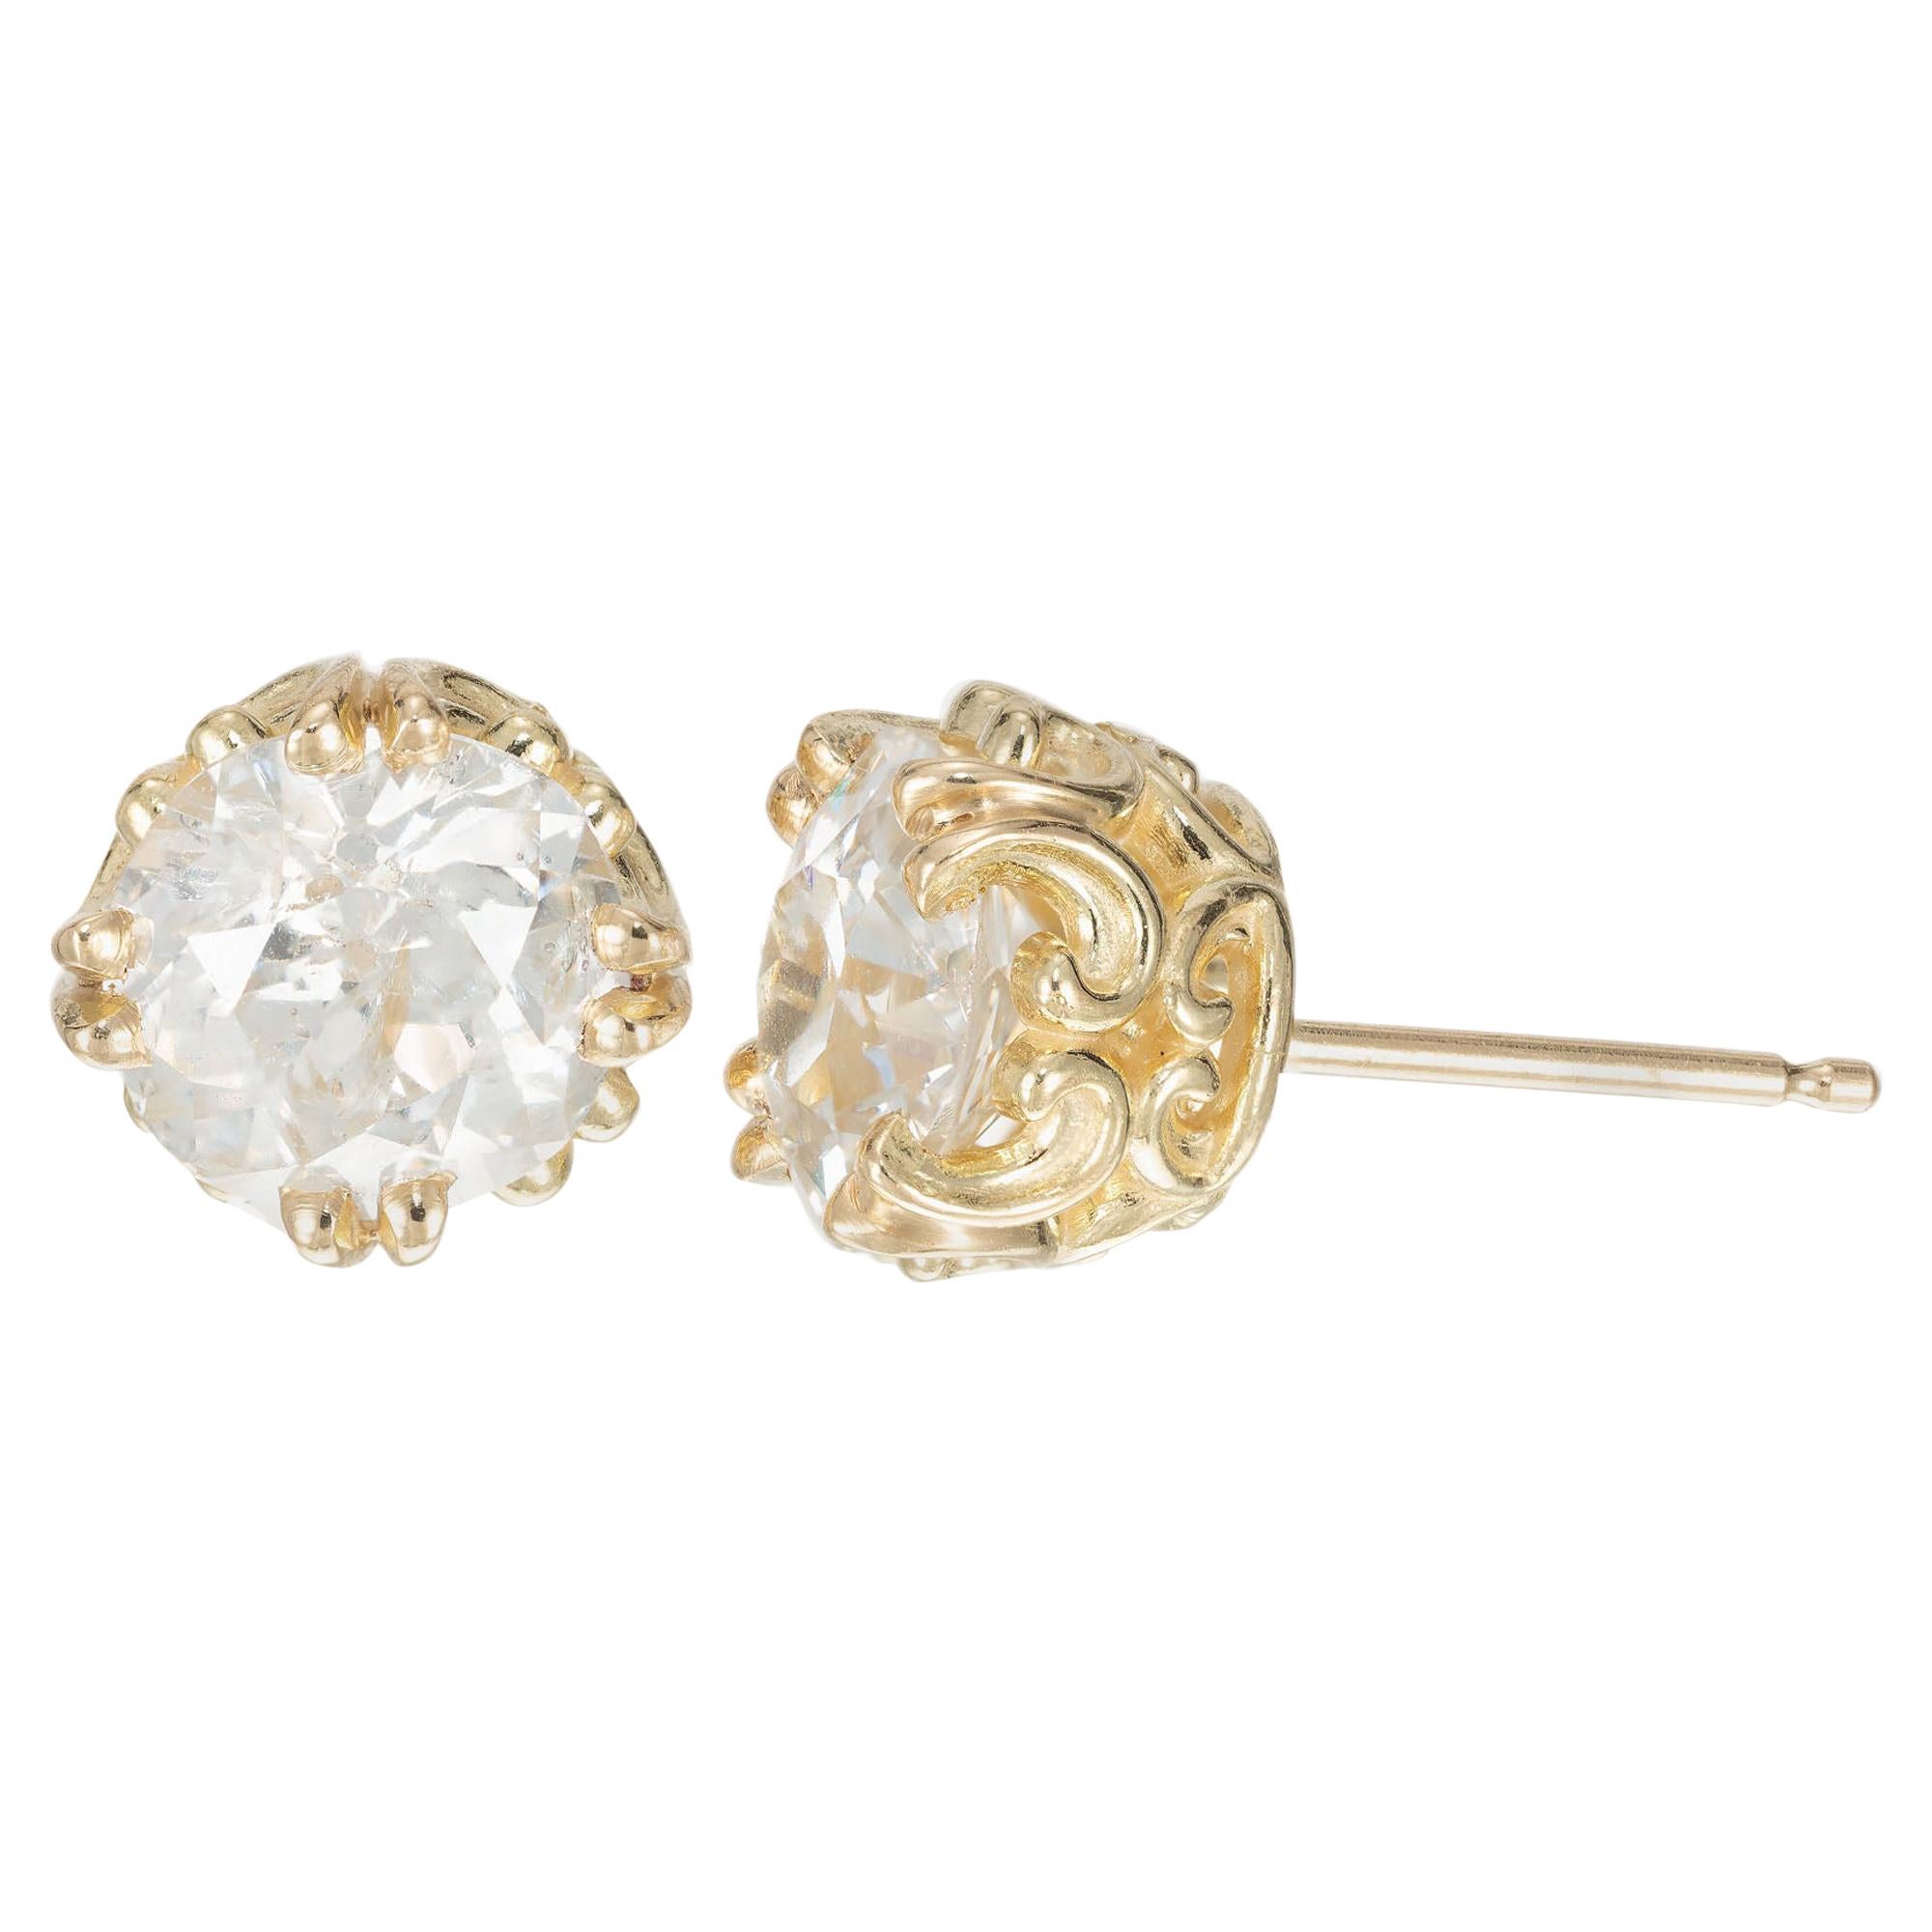 Peter Suchy 2.41 Carat Diamond Yellow Gold Stud Earrings